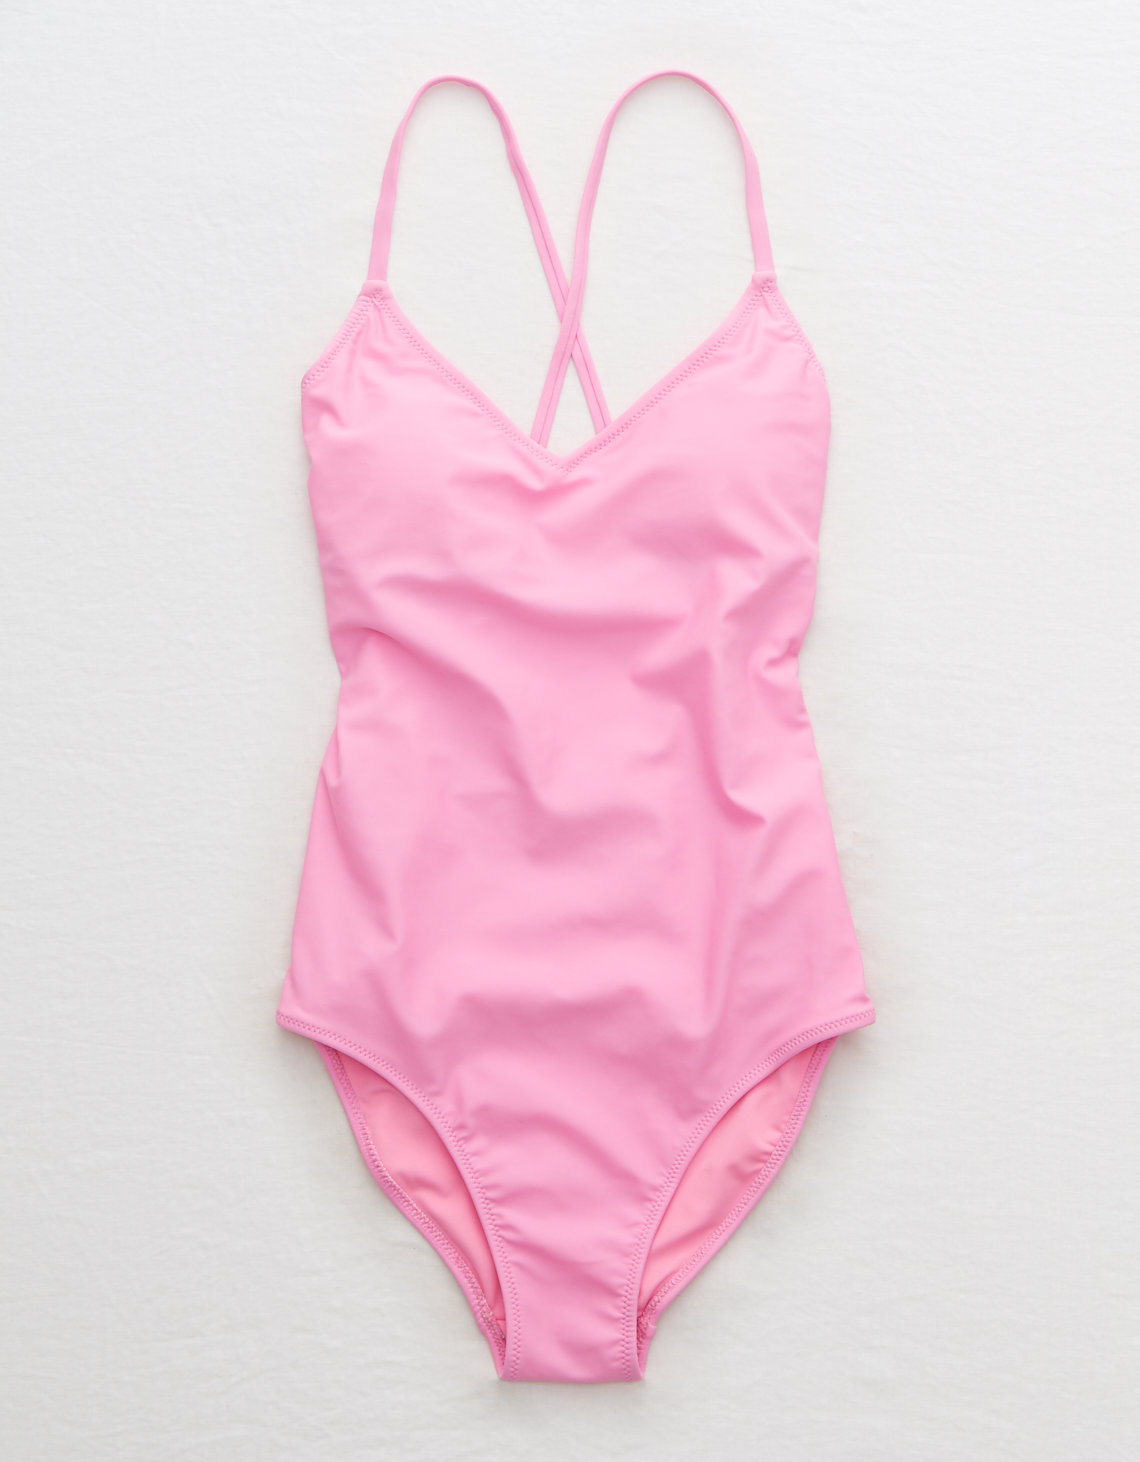 Iskra Lawrence Highlights Her Sensational Curves In Neon Pink Swim Suit